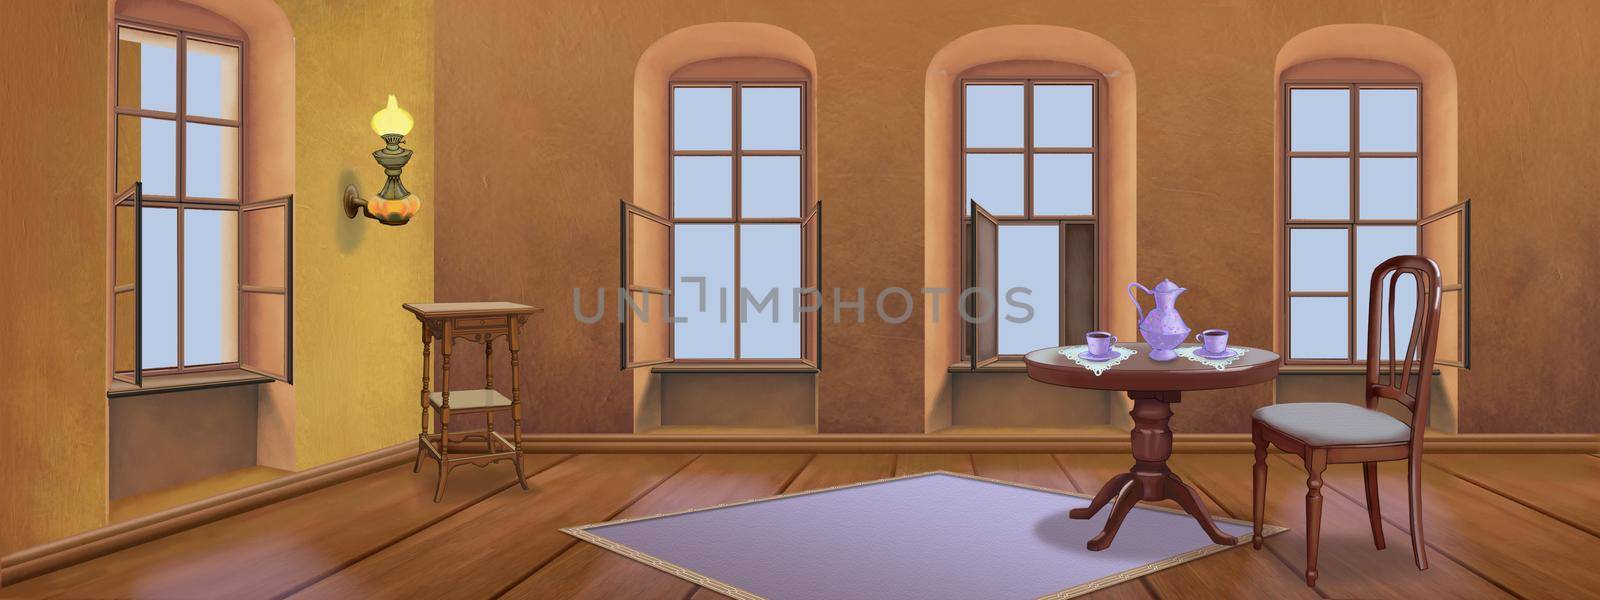 Room interior in retro style. Digital Painting Background, Illustration.